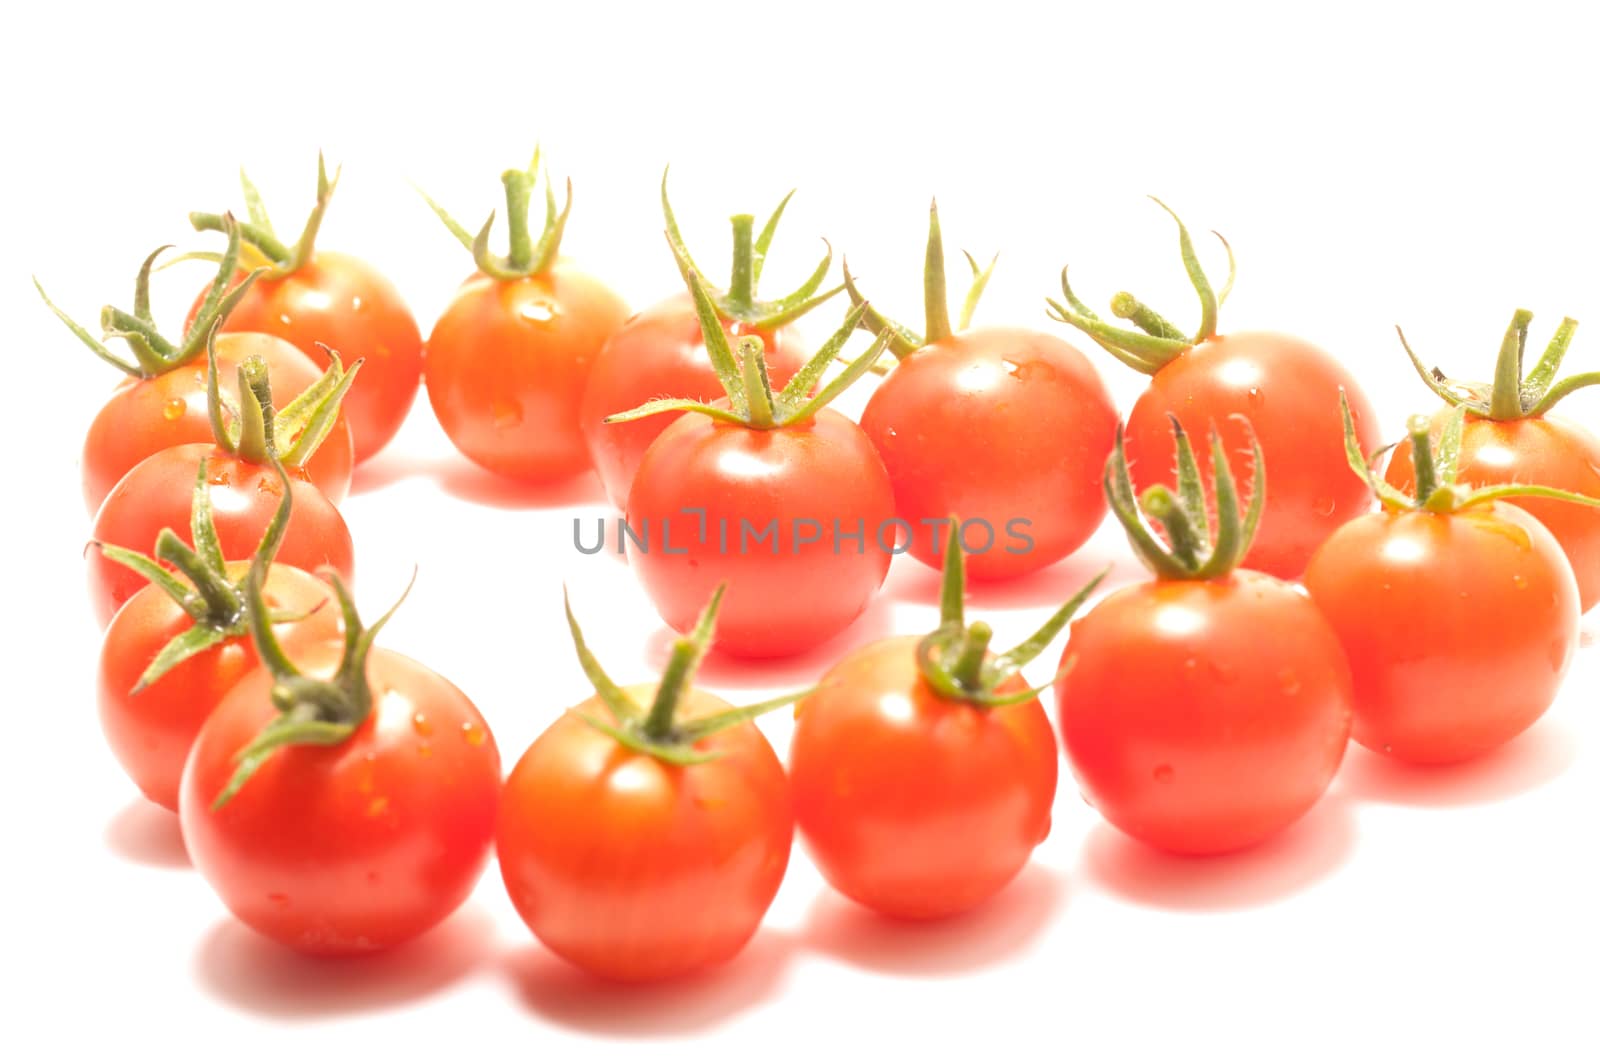 Cherry tomatoes heart shape by daoleduc